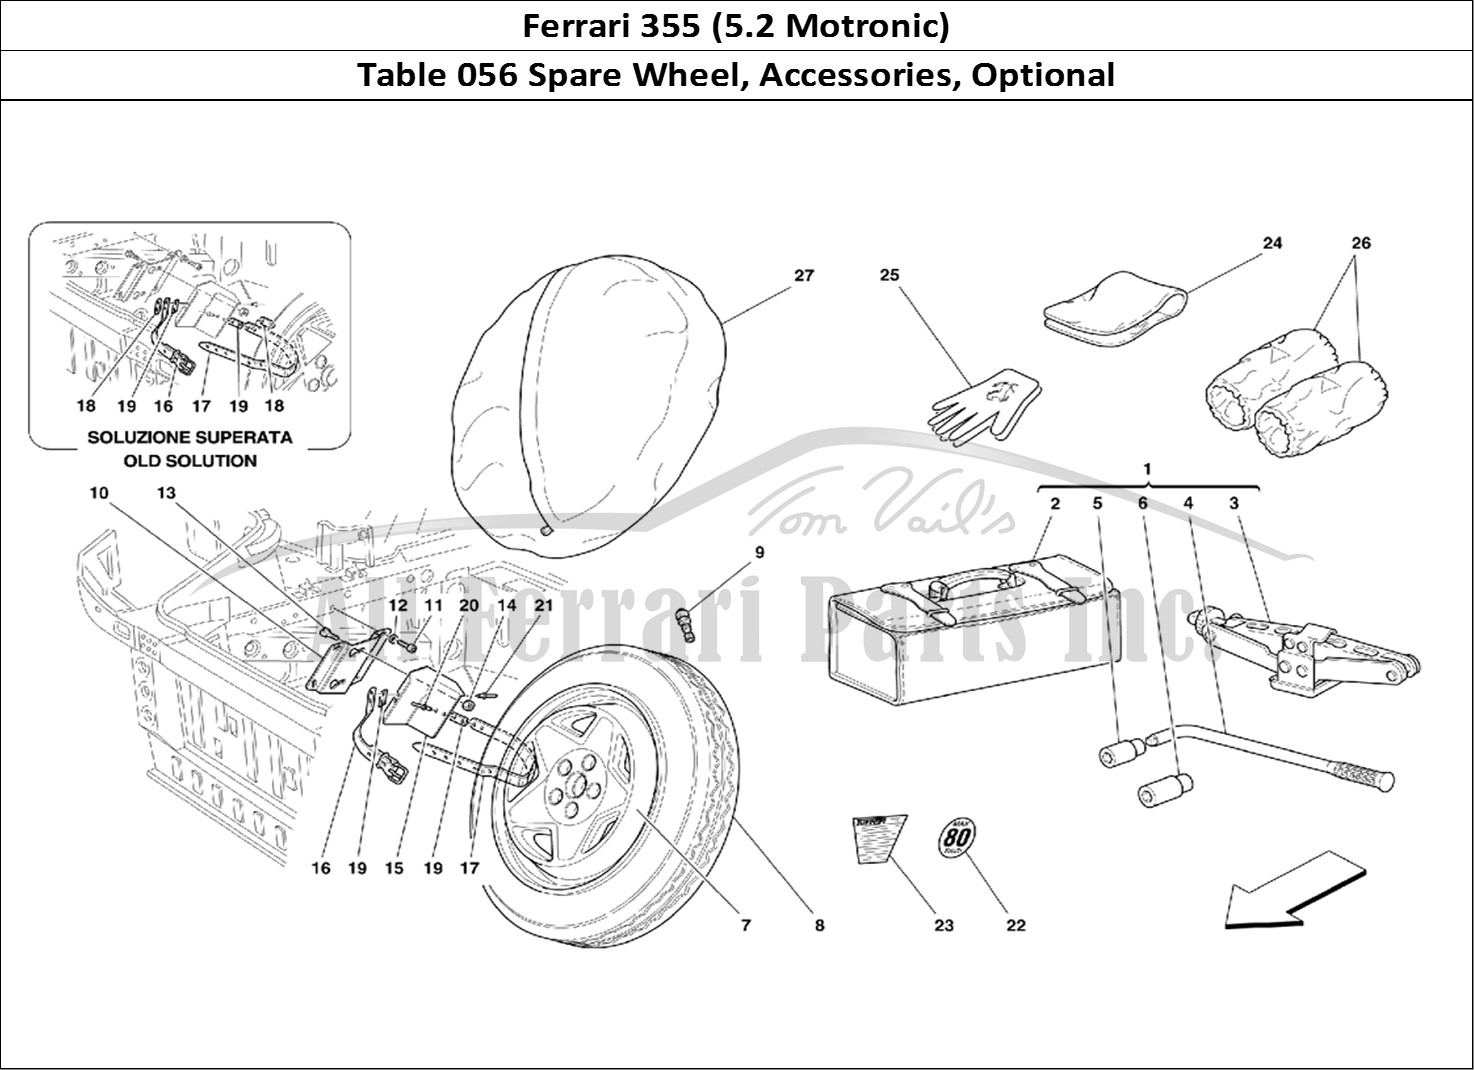 Ferrari Parts Ferrari 355 (5.2 Motronic) Page 056 Spare Wheel and Equipment